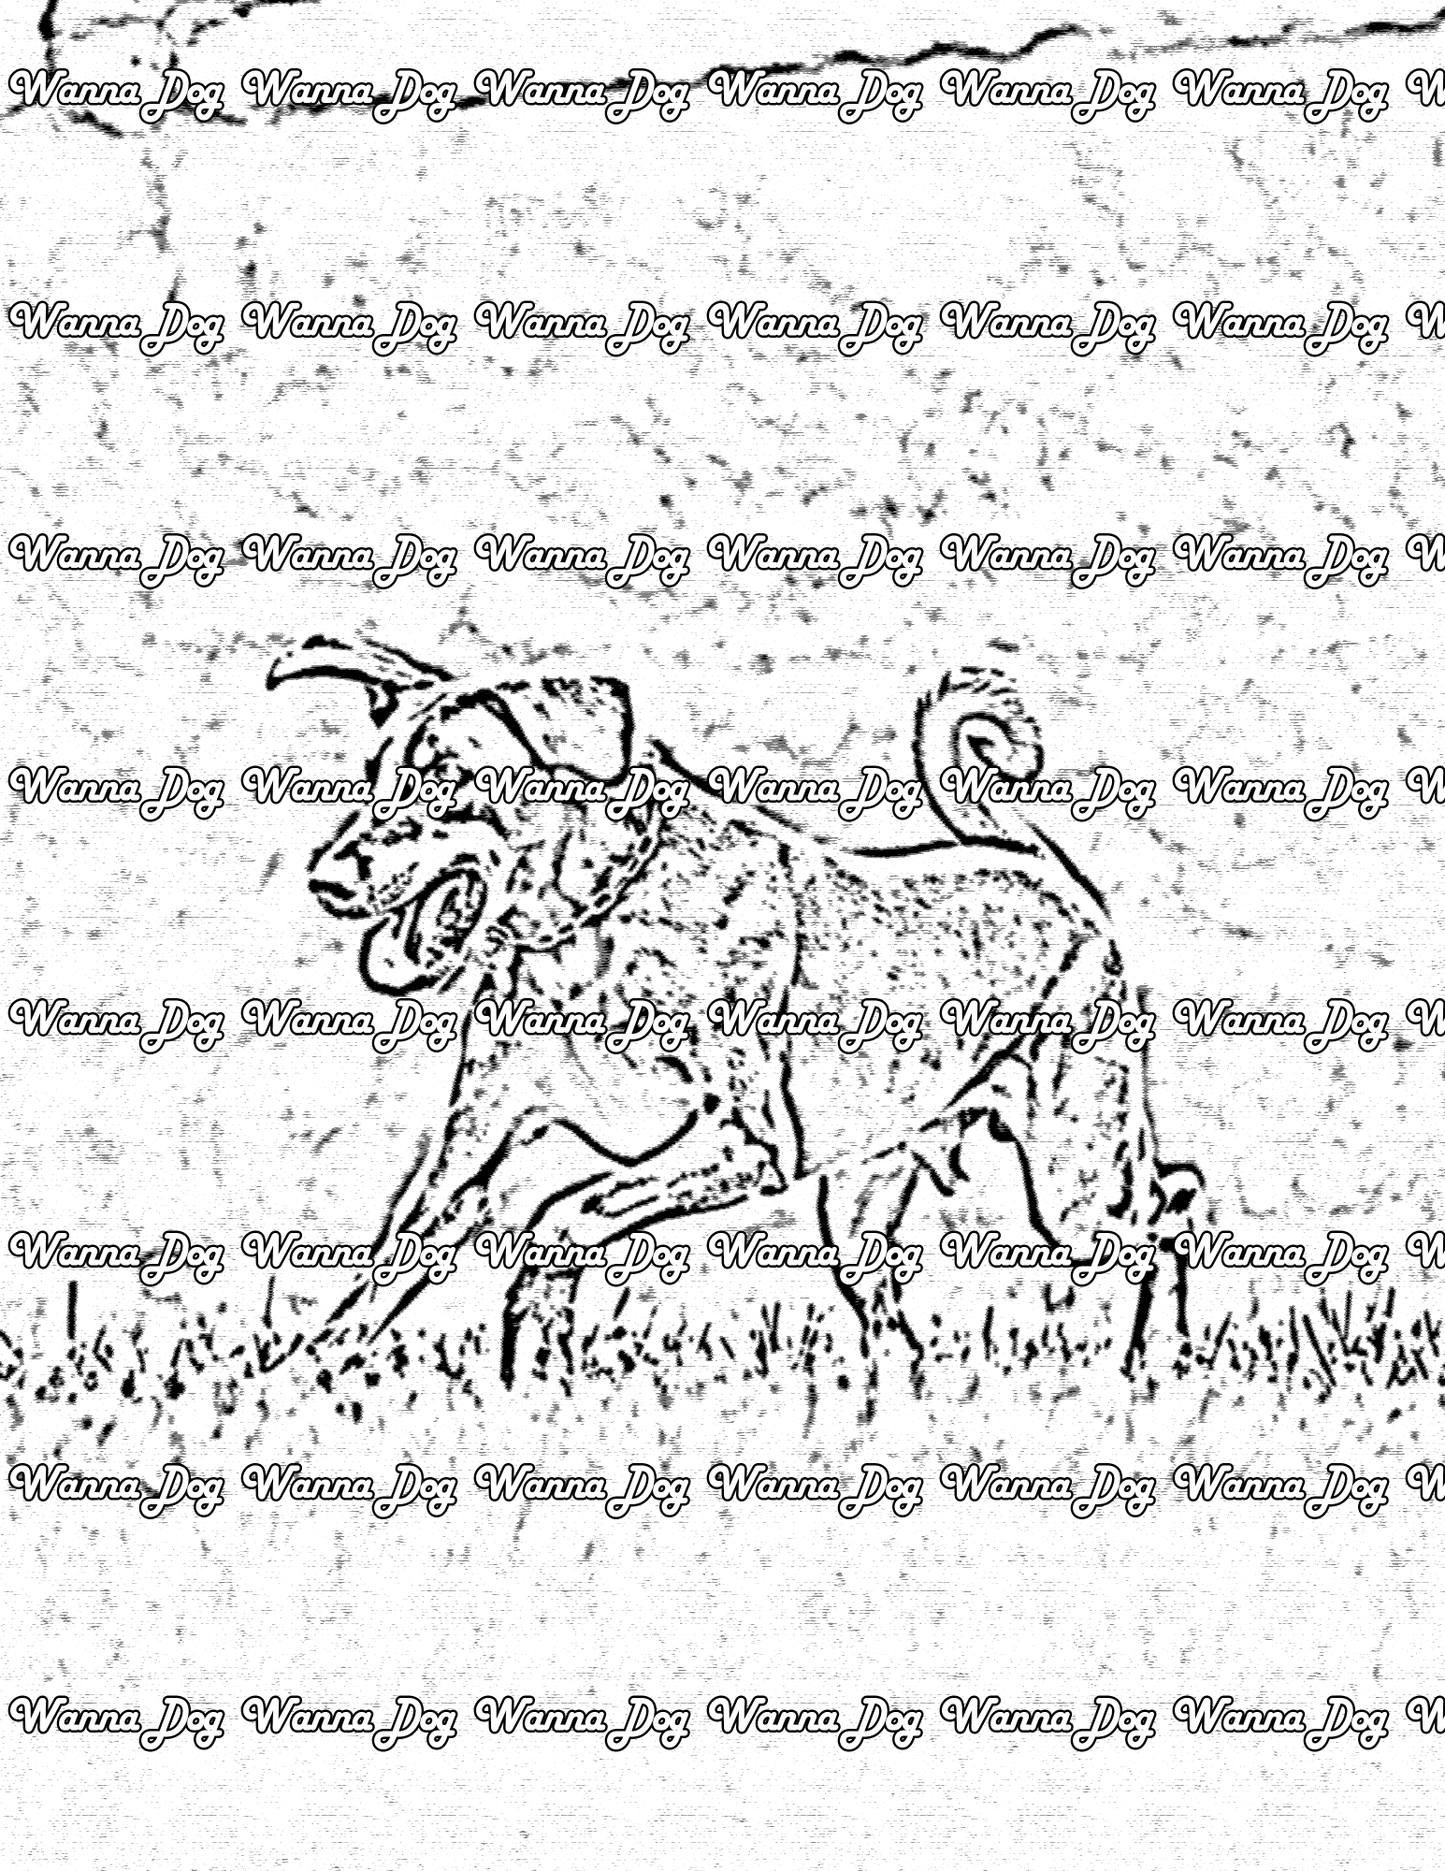 Doberman Coloring Page of a Doberman running